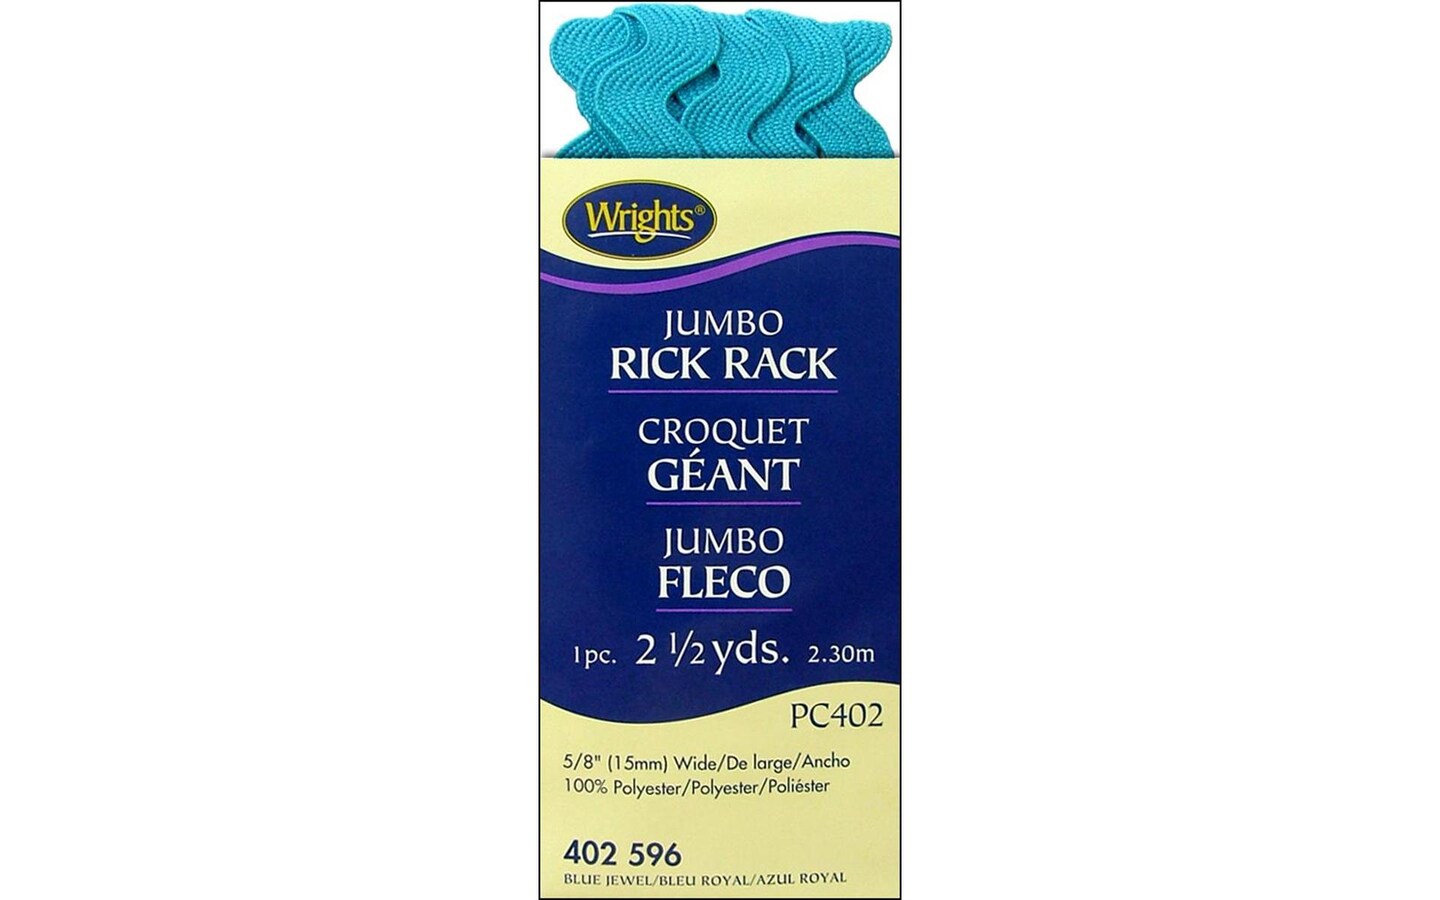 Wrights Jumbo Rick Rack 2.5yd Blue Jewel